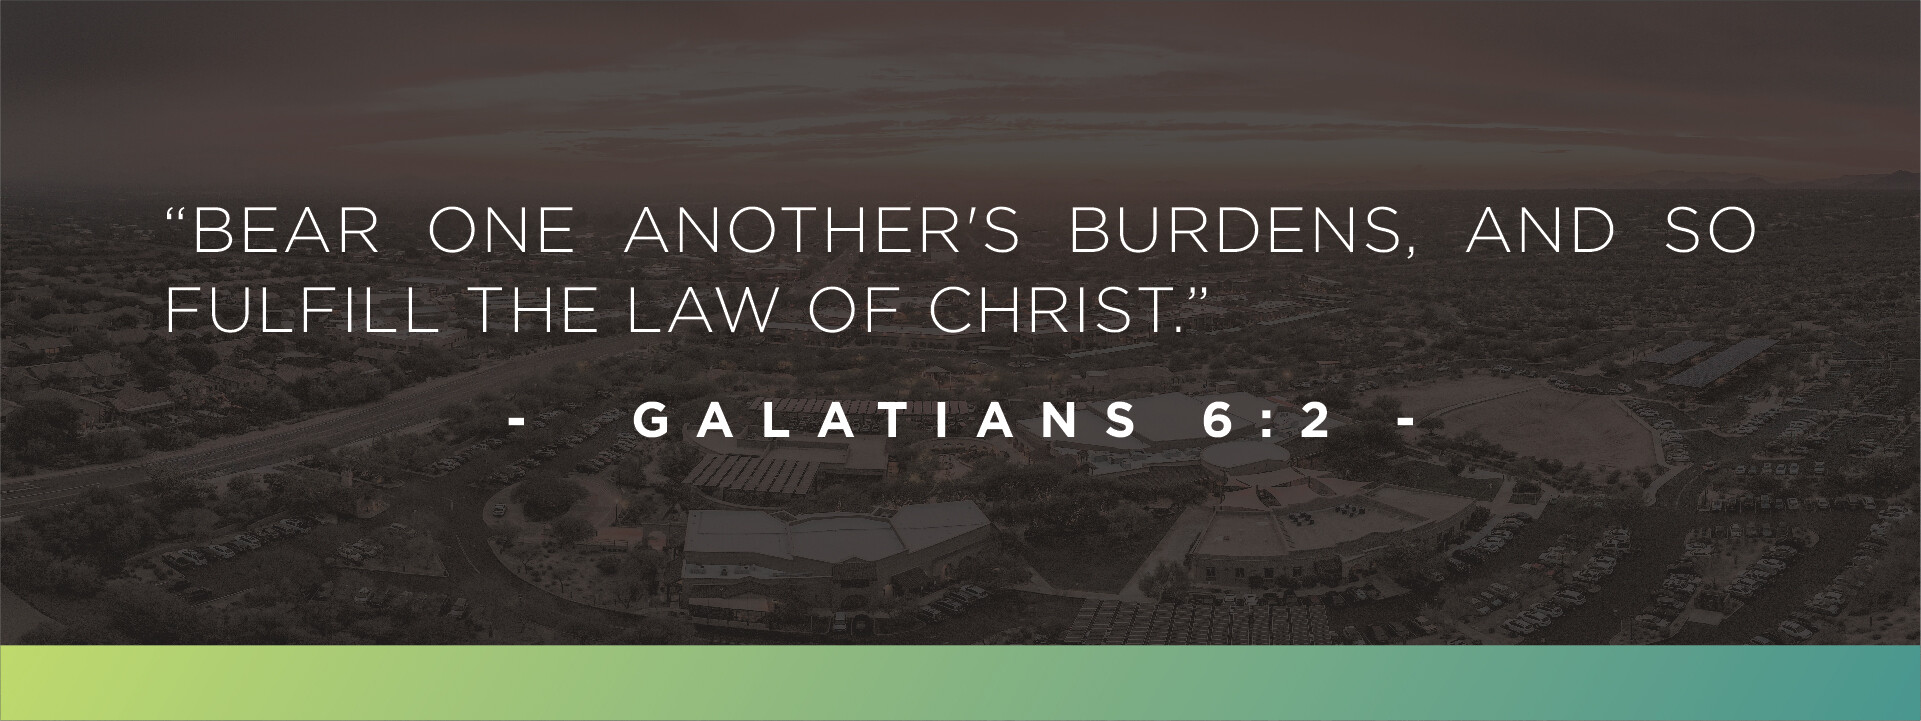 community aid, galatians 6:2